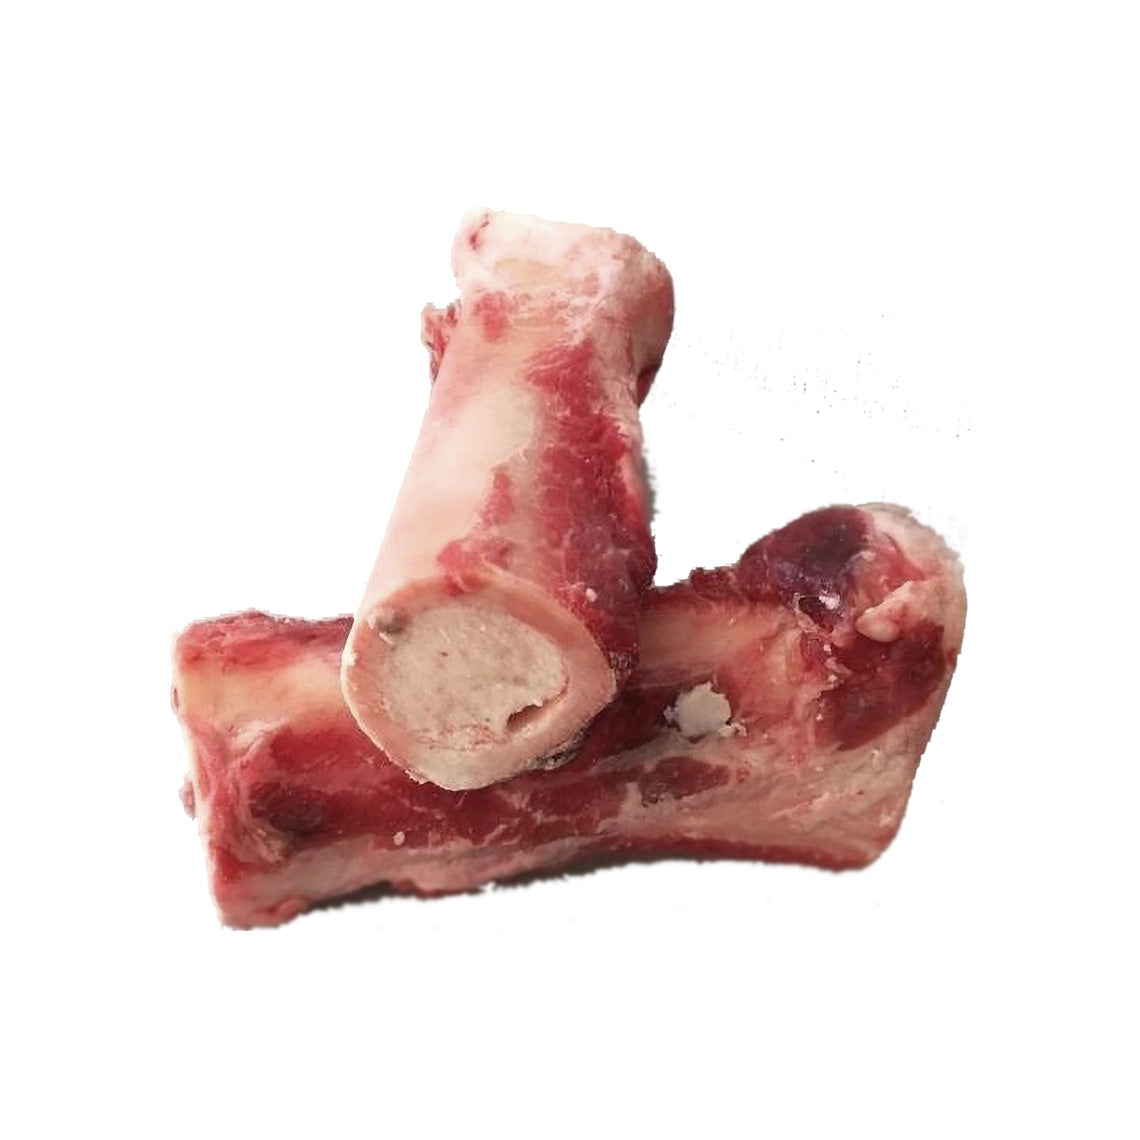 small marrow bones for dogs